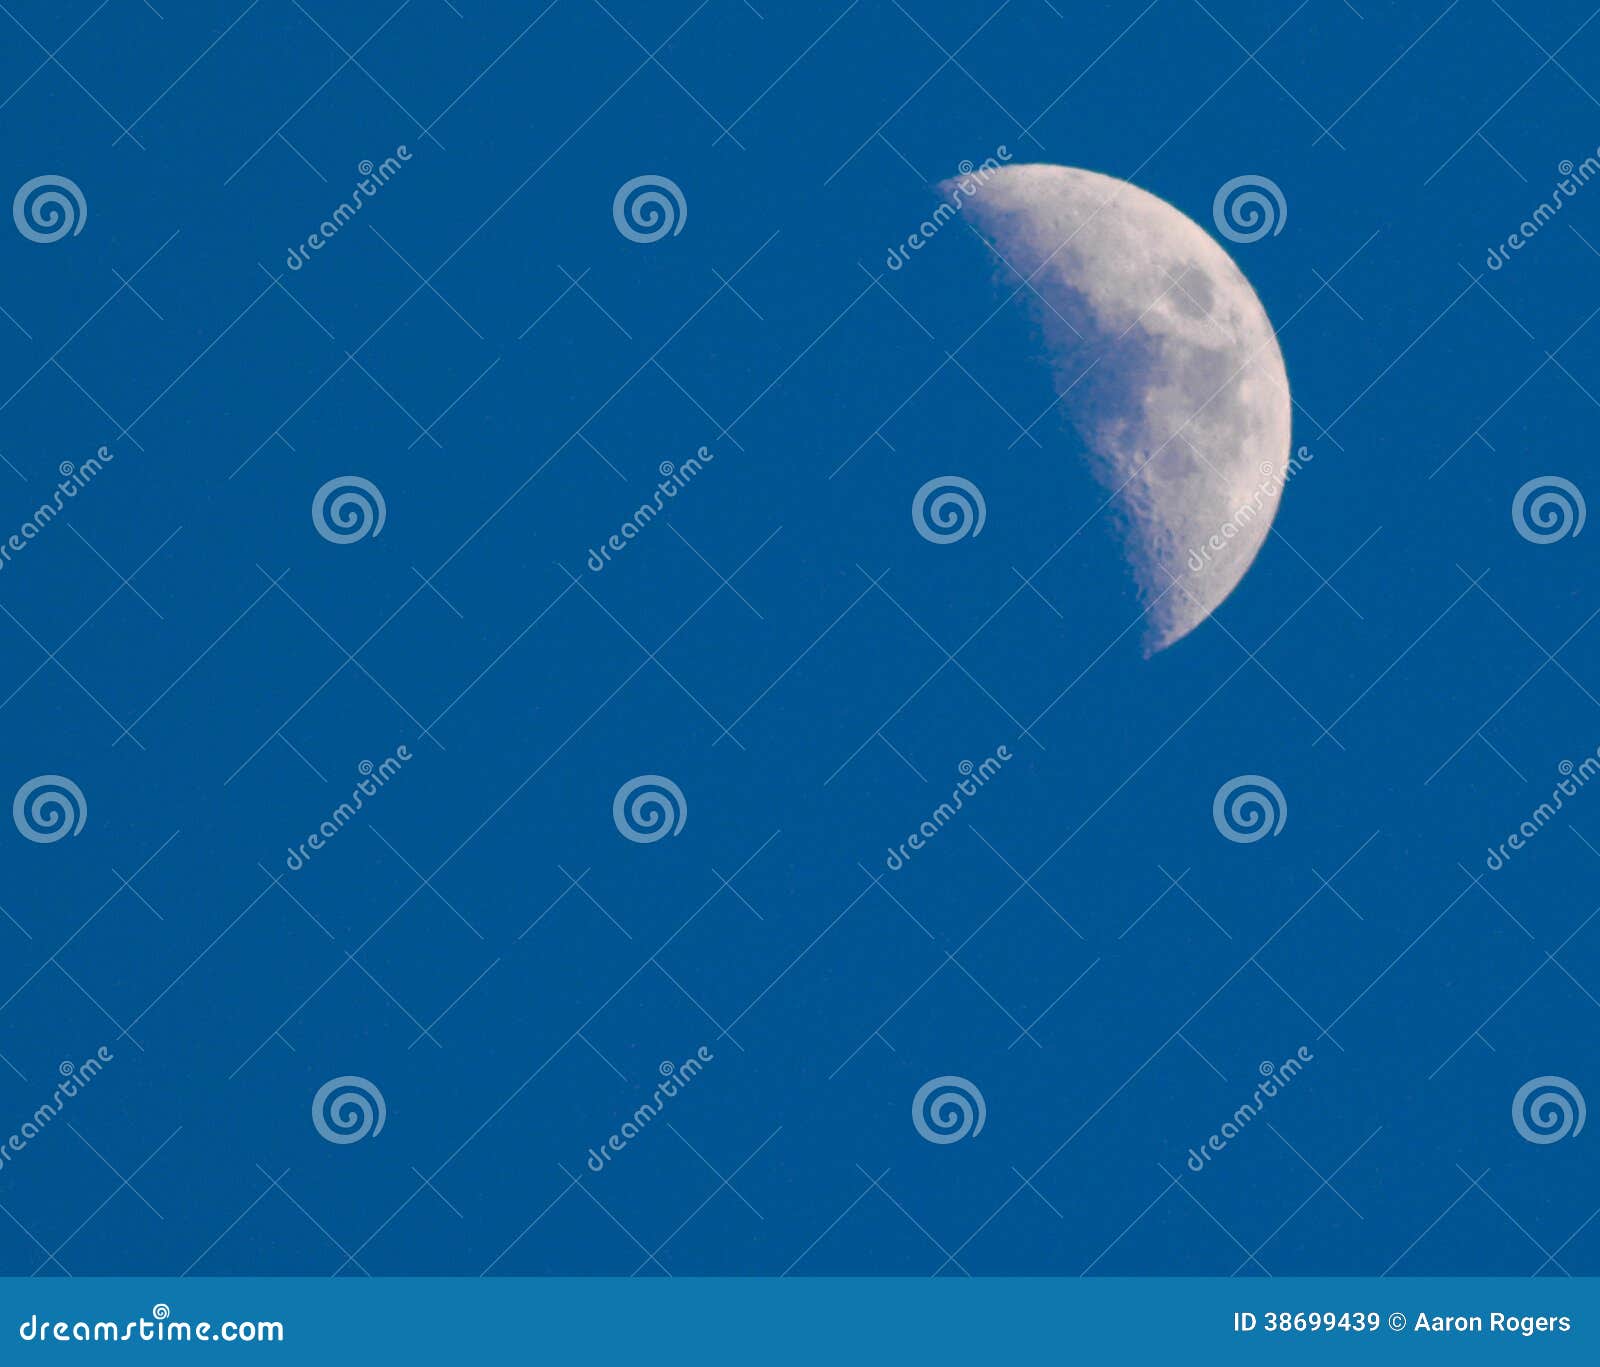 blue sky daytime half moon